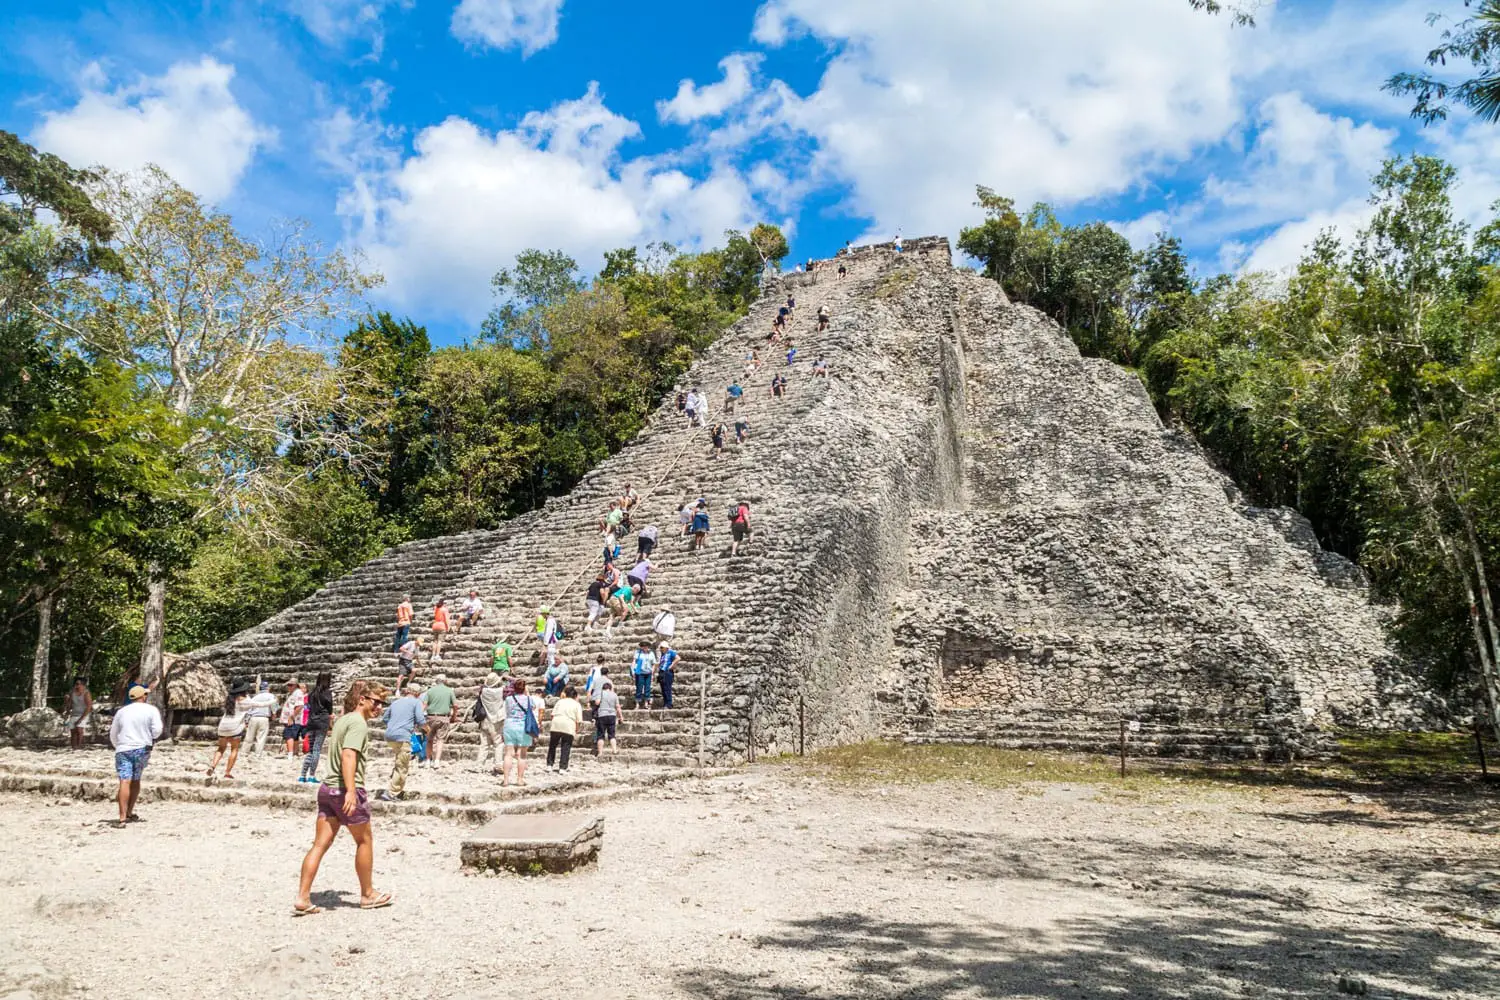 Tourist climb the Pyramid Nohoch Mul at the ruins of the Mayan city Coba, Mexico